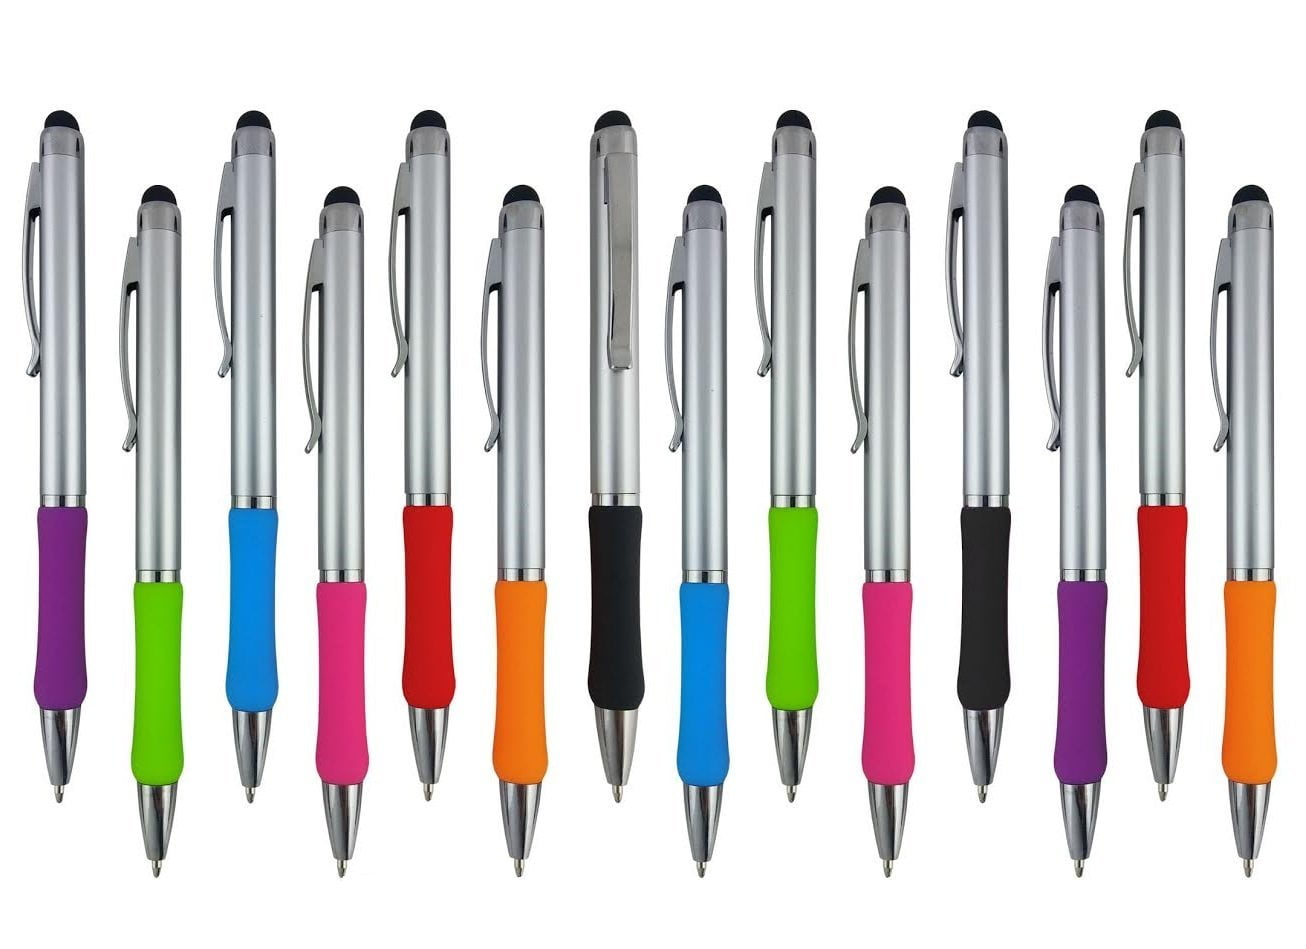 Stylus Pens - 2 in 1 Touch Screen & Writing Pen, Sensitive Stylus